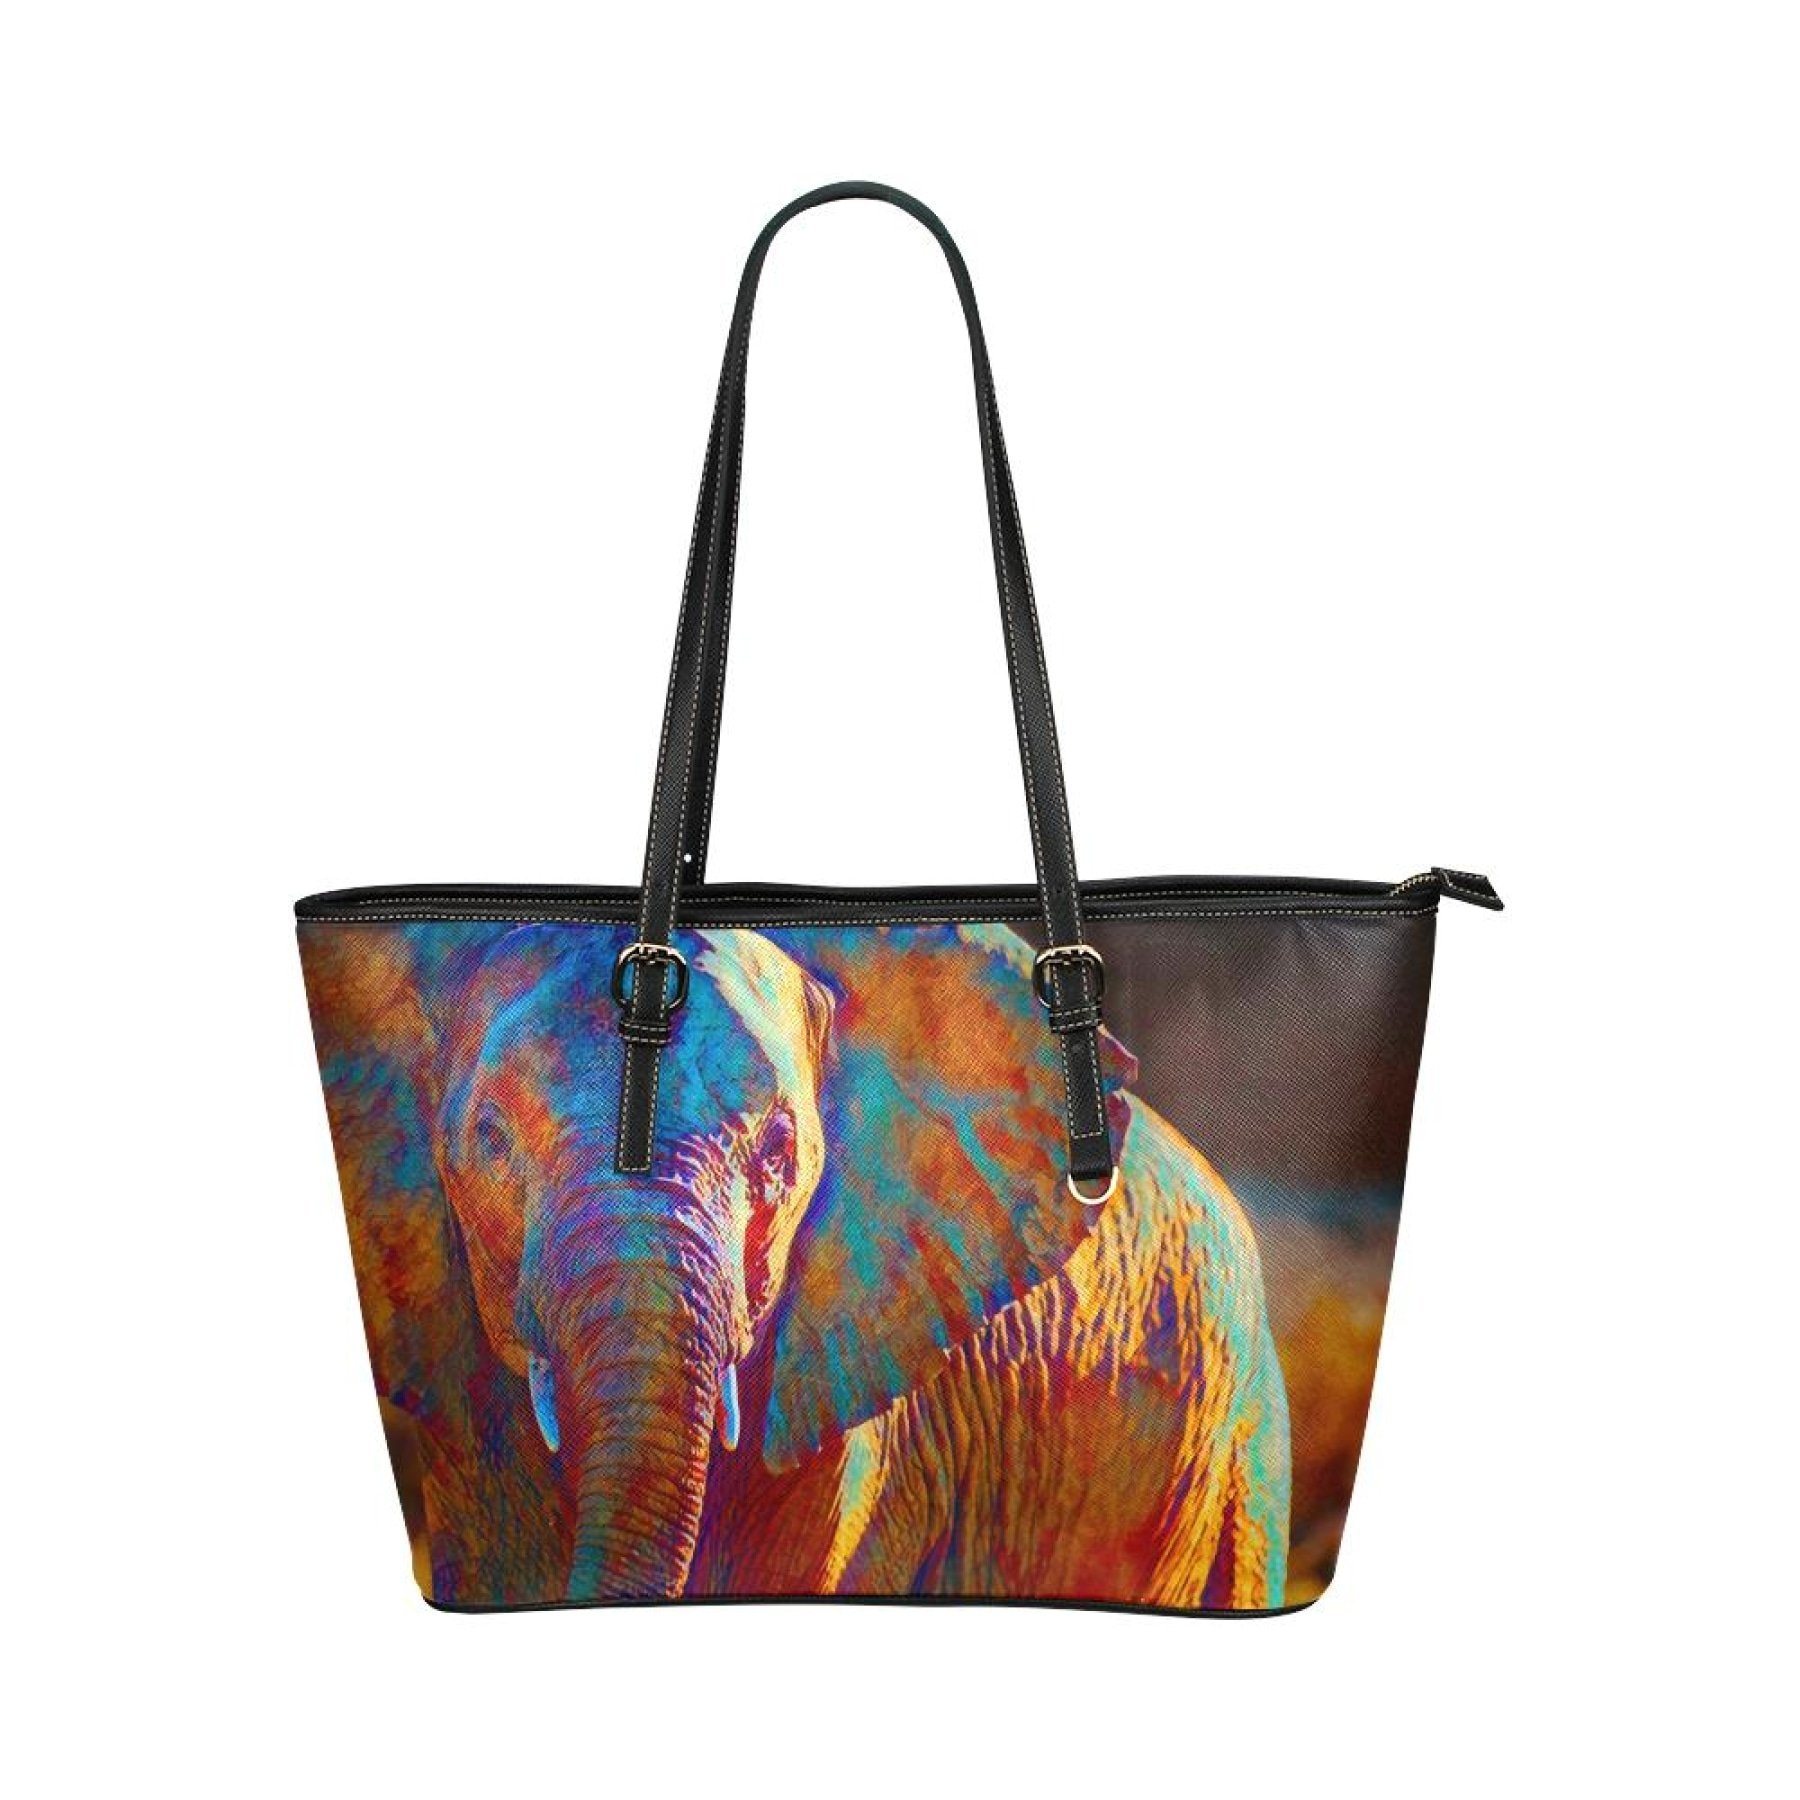 Designer Tote Bags, Colorful Elephant Art Leather Bag 5